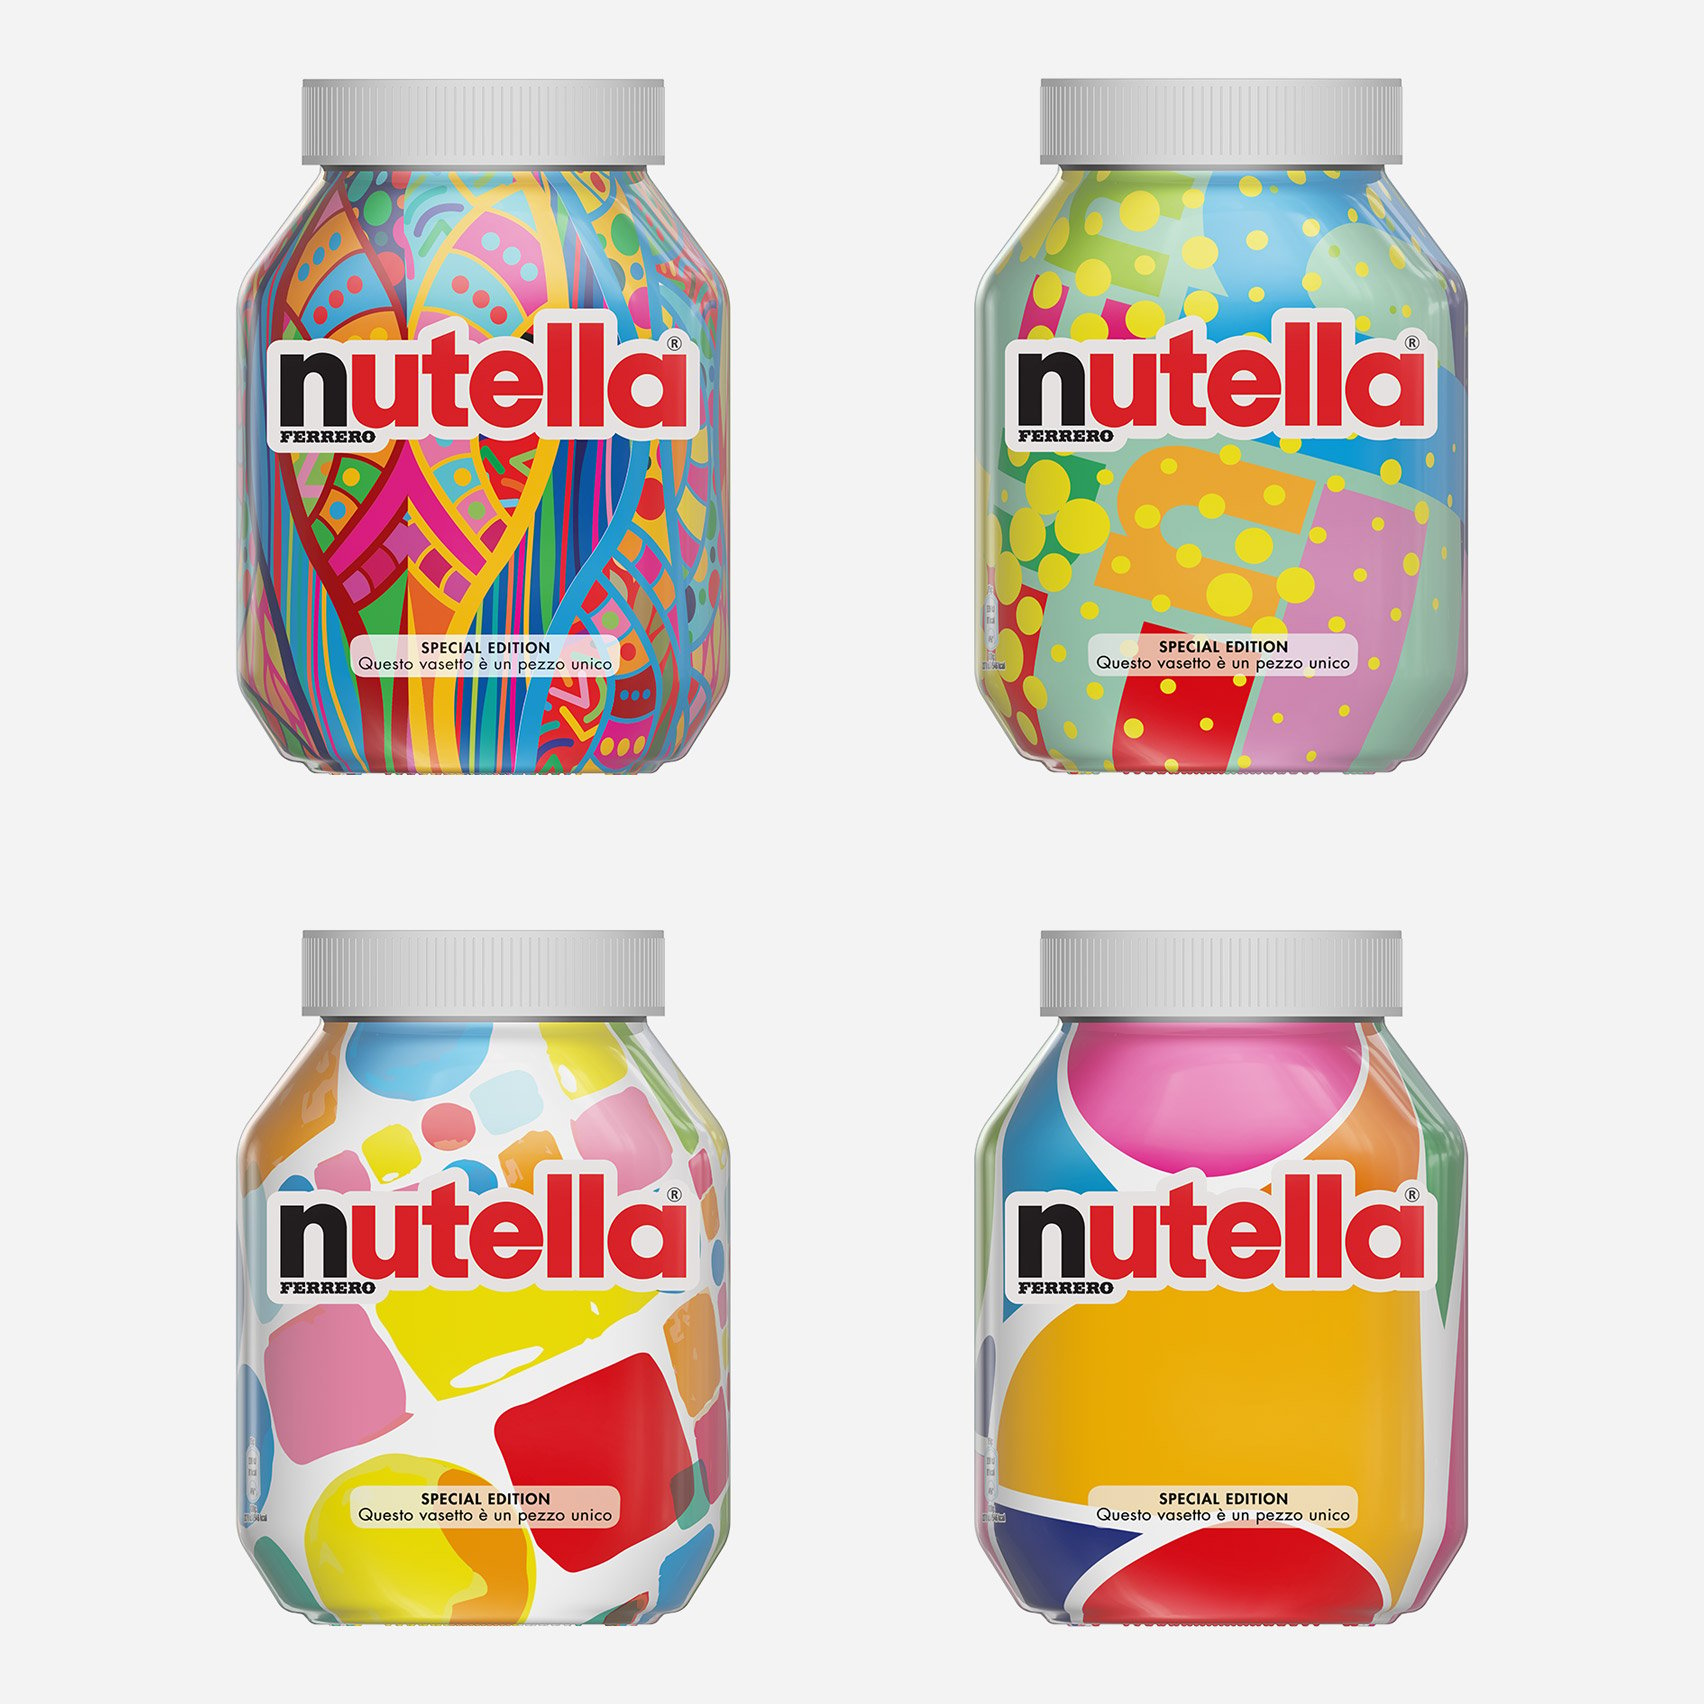 https://static.dezeen.com/uploads/2017/06/nutella-unica-packaging-design-products-_dezeen_sq-edit.jpg